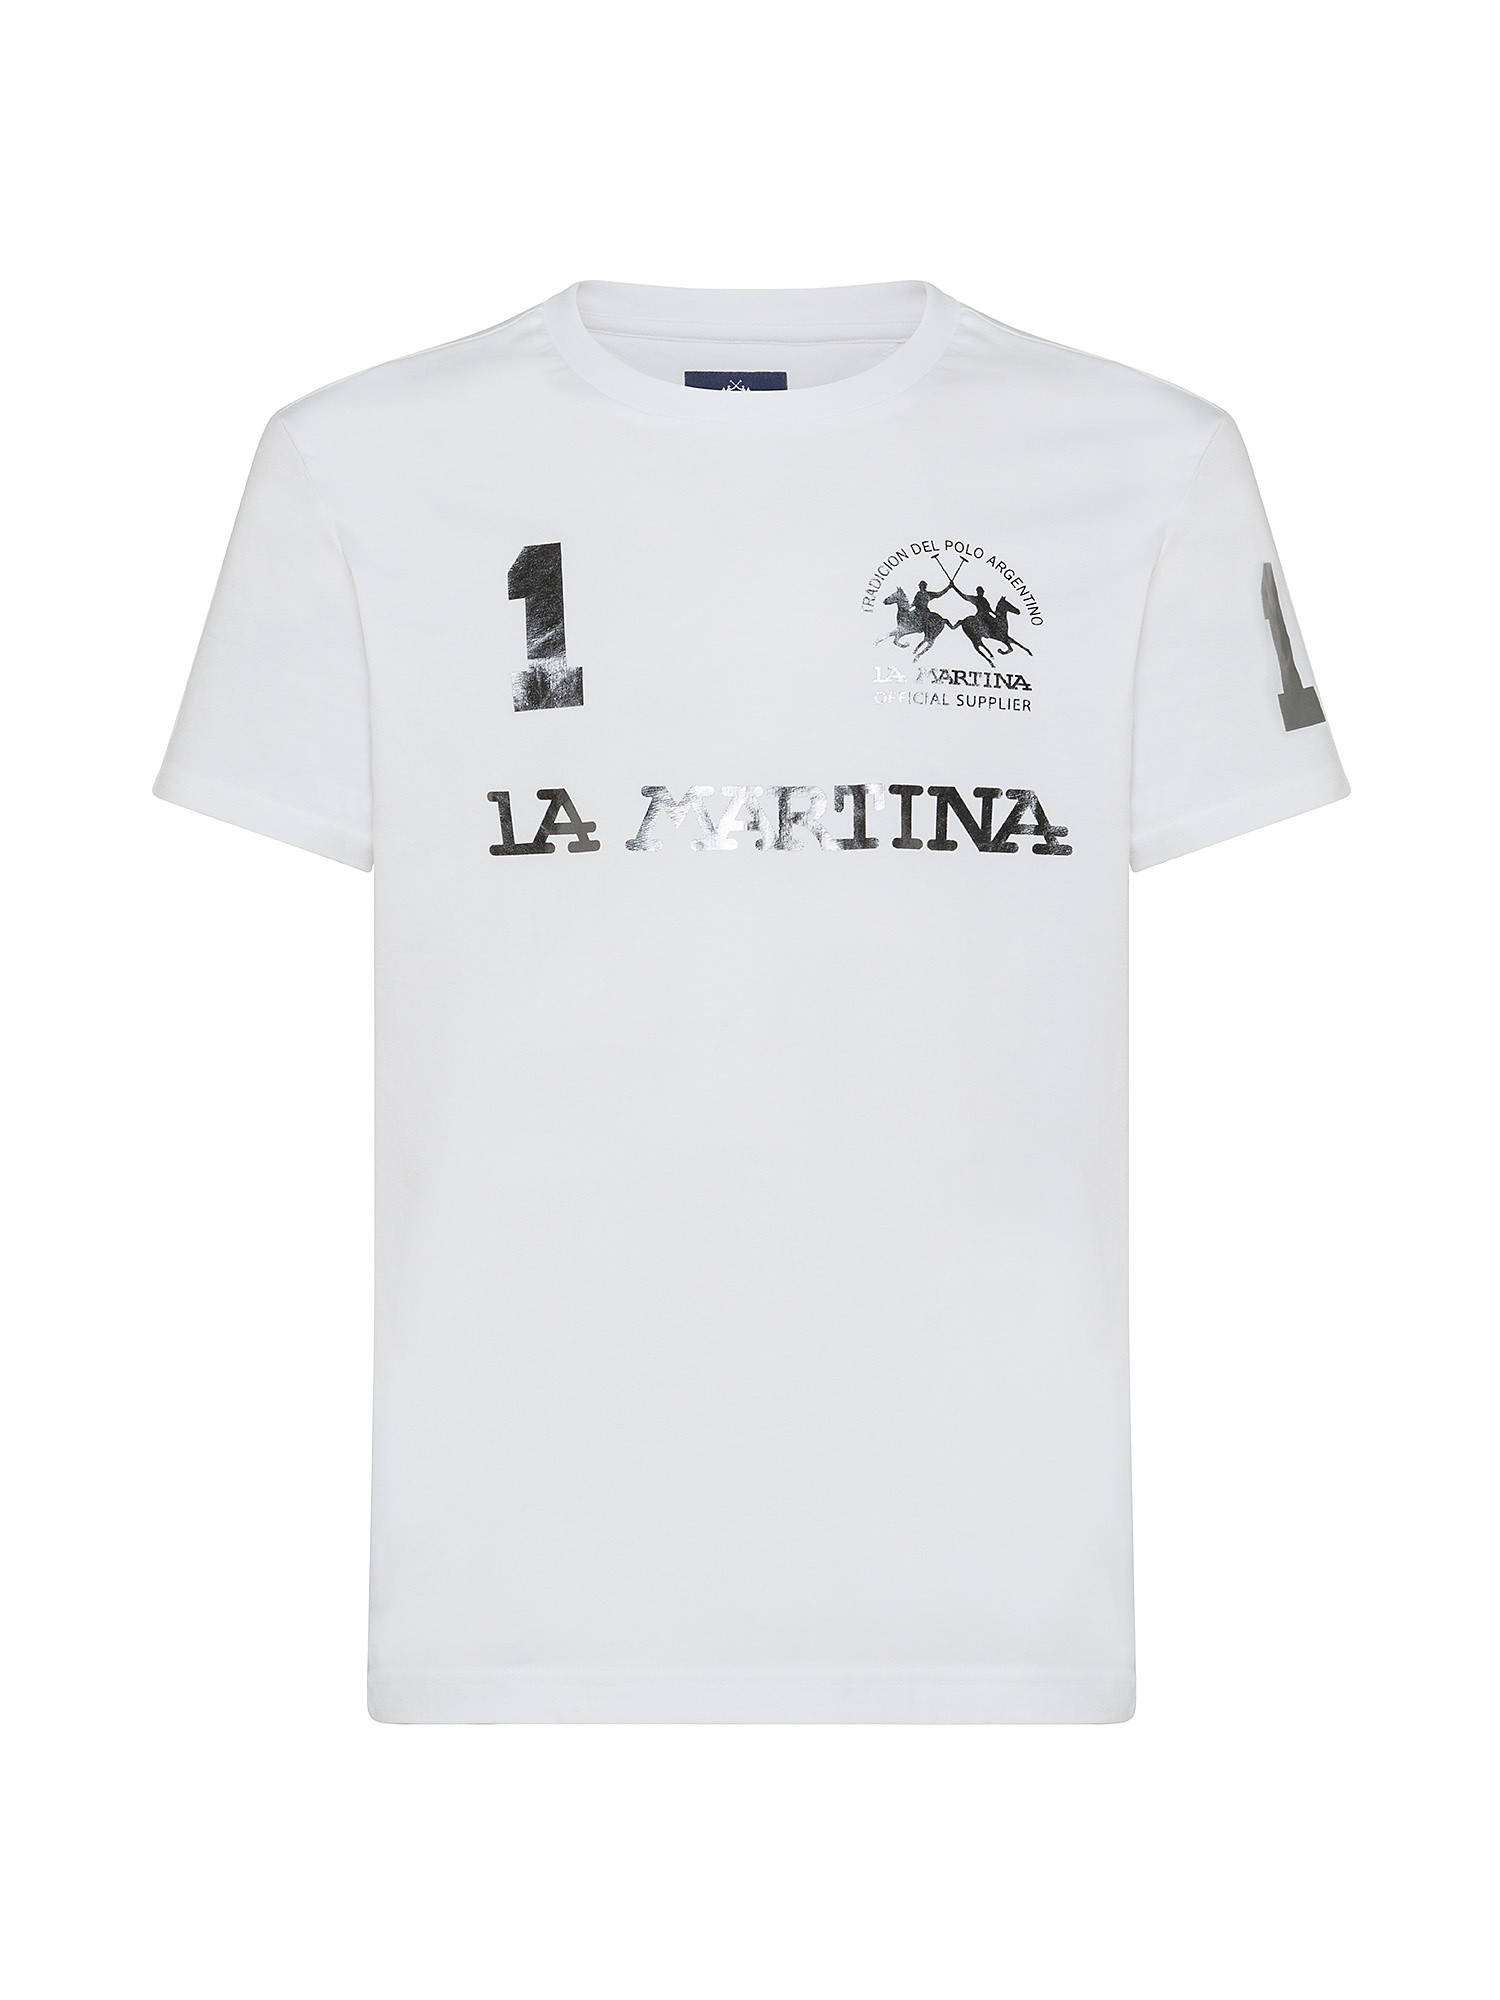 La Martina - T-shirt maniche corte in cotone jersey, Bianco, large image number 0